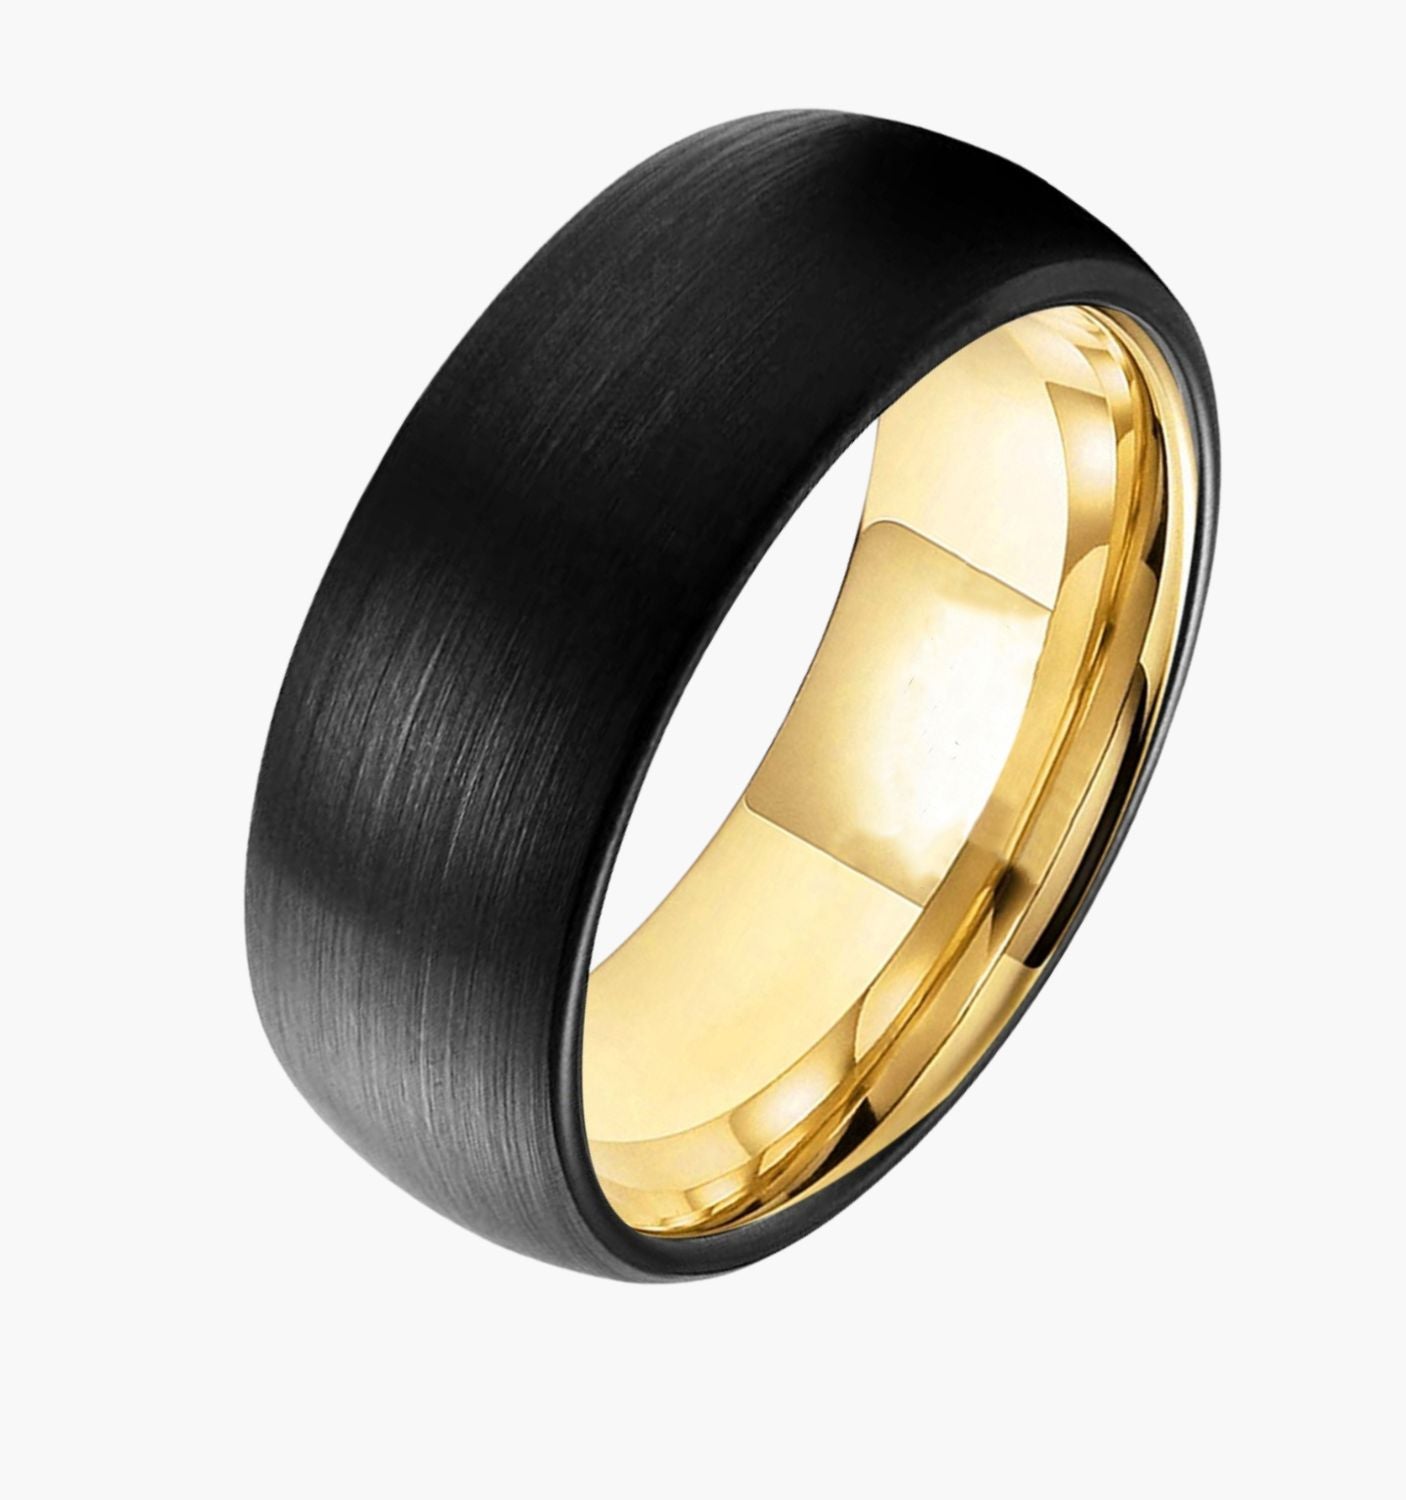 Black and Gold Men's Wedding Ring